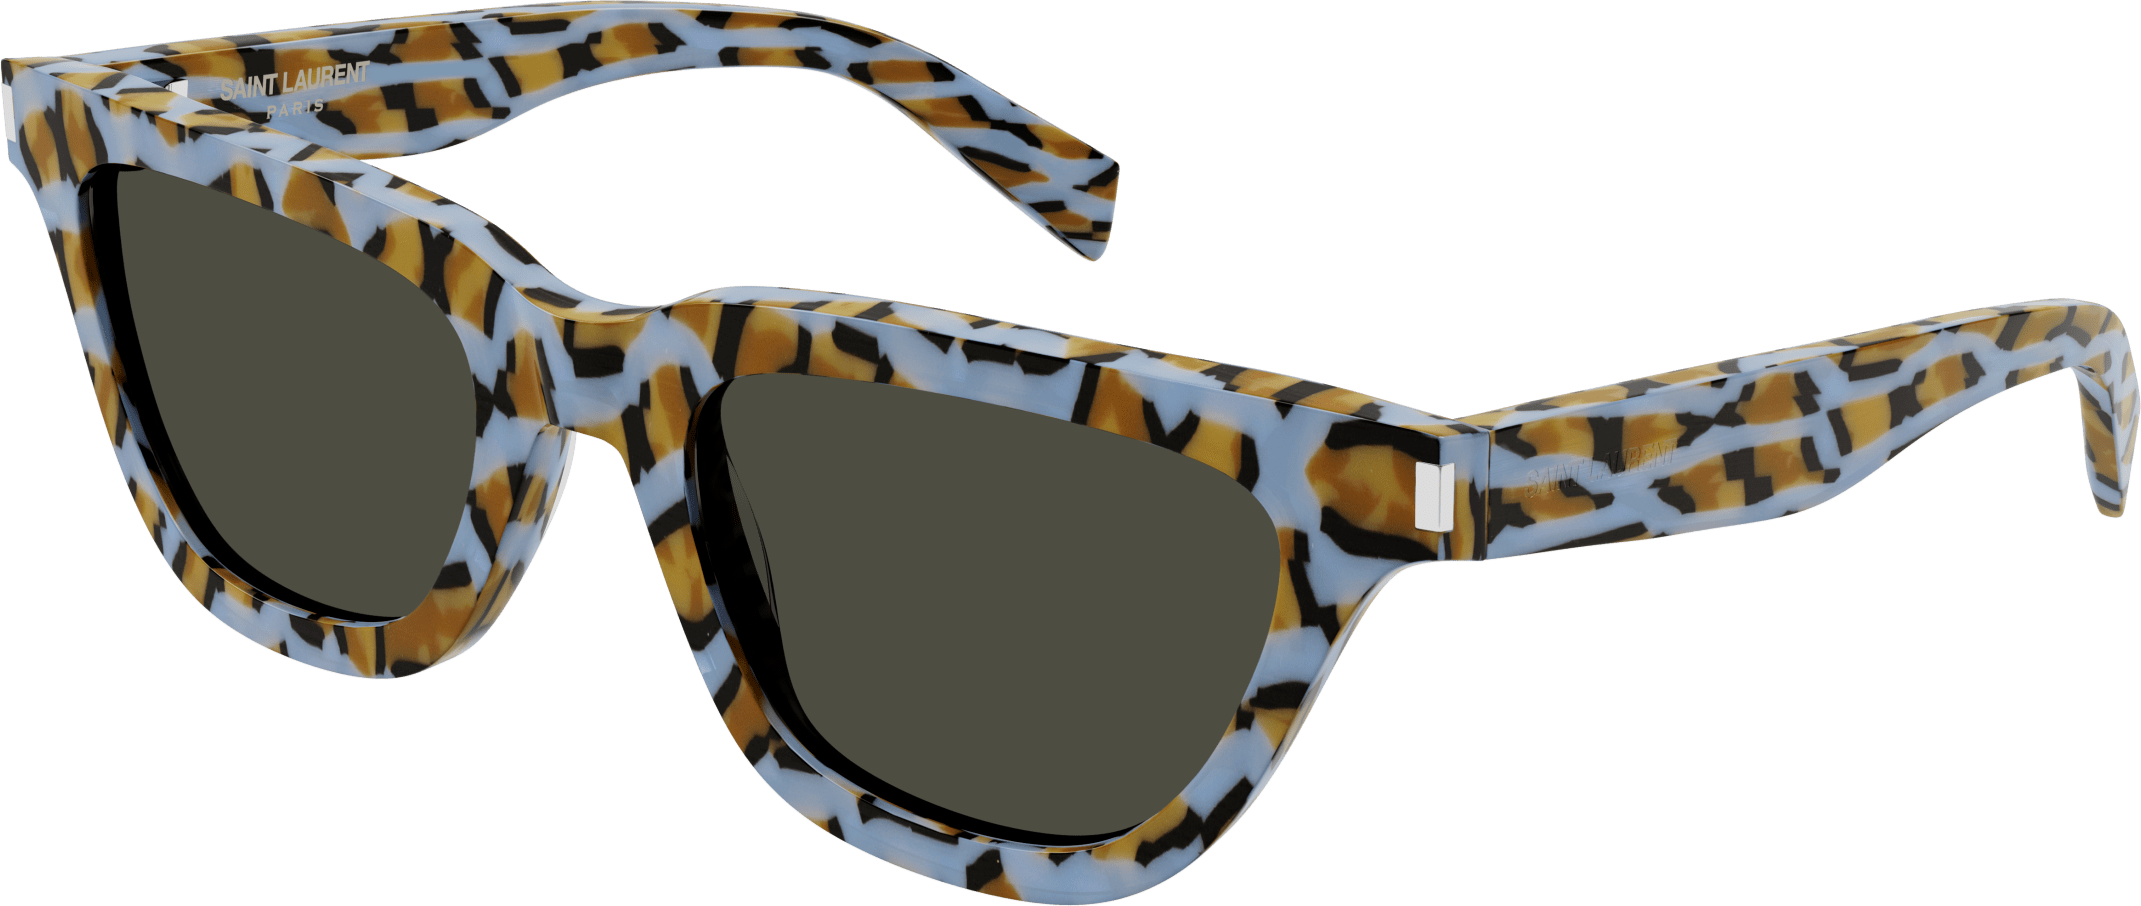 Saint Laurent Sulpice SL 462 Cat Eye Sunglasses